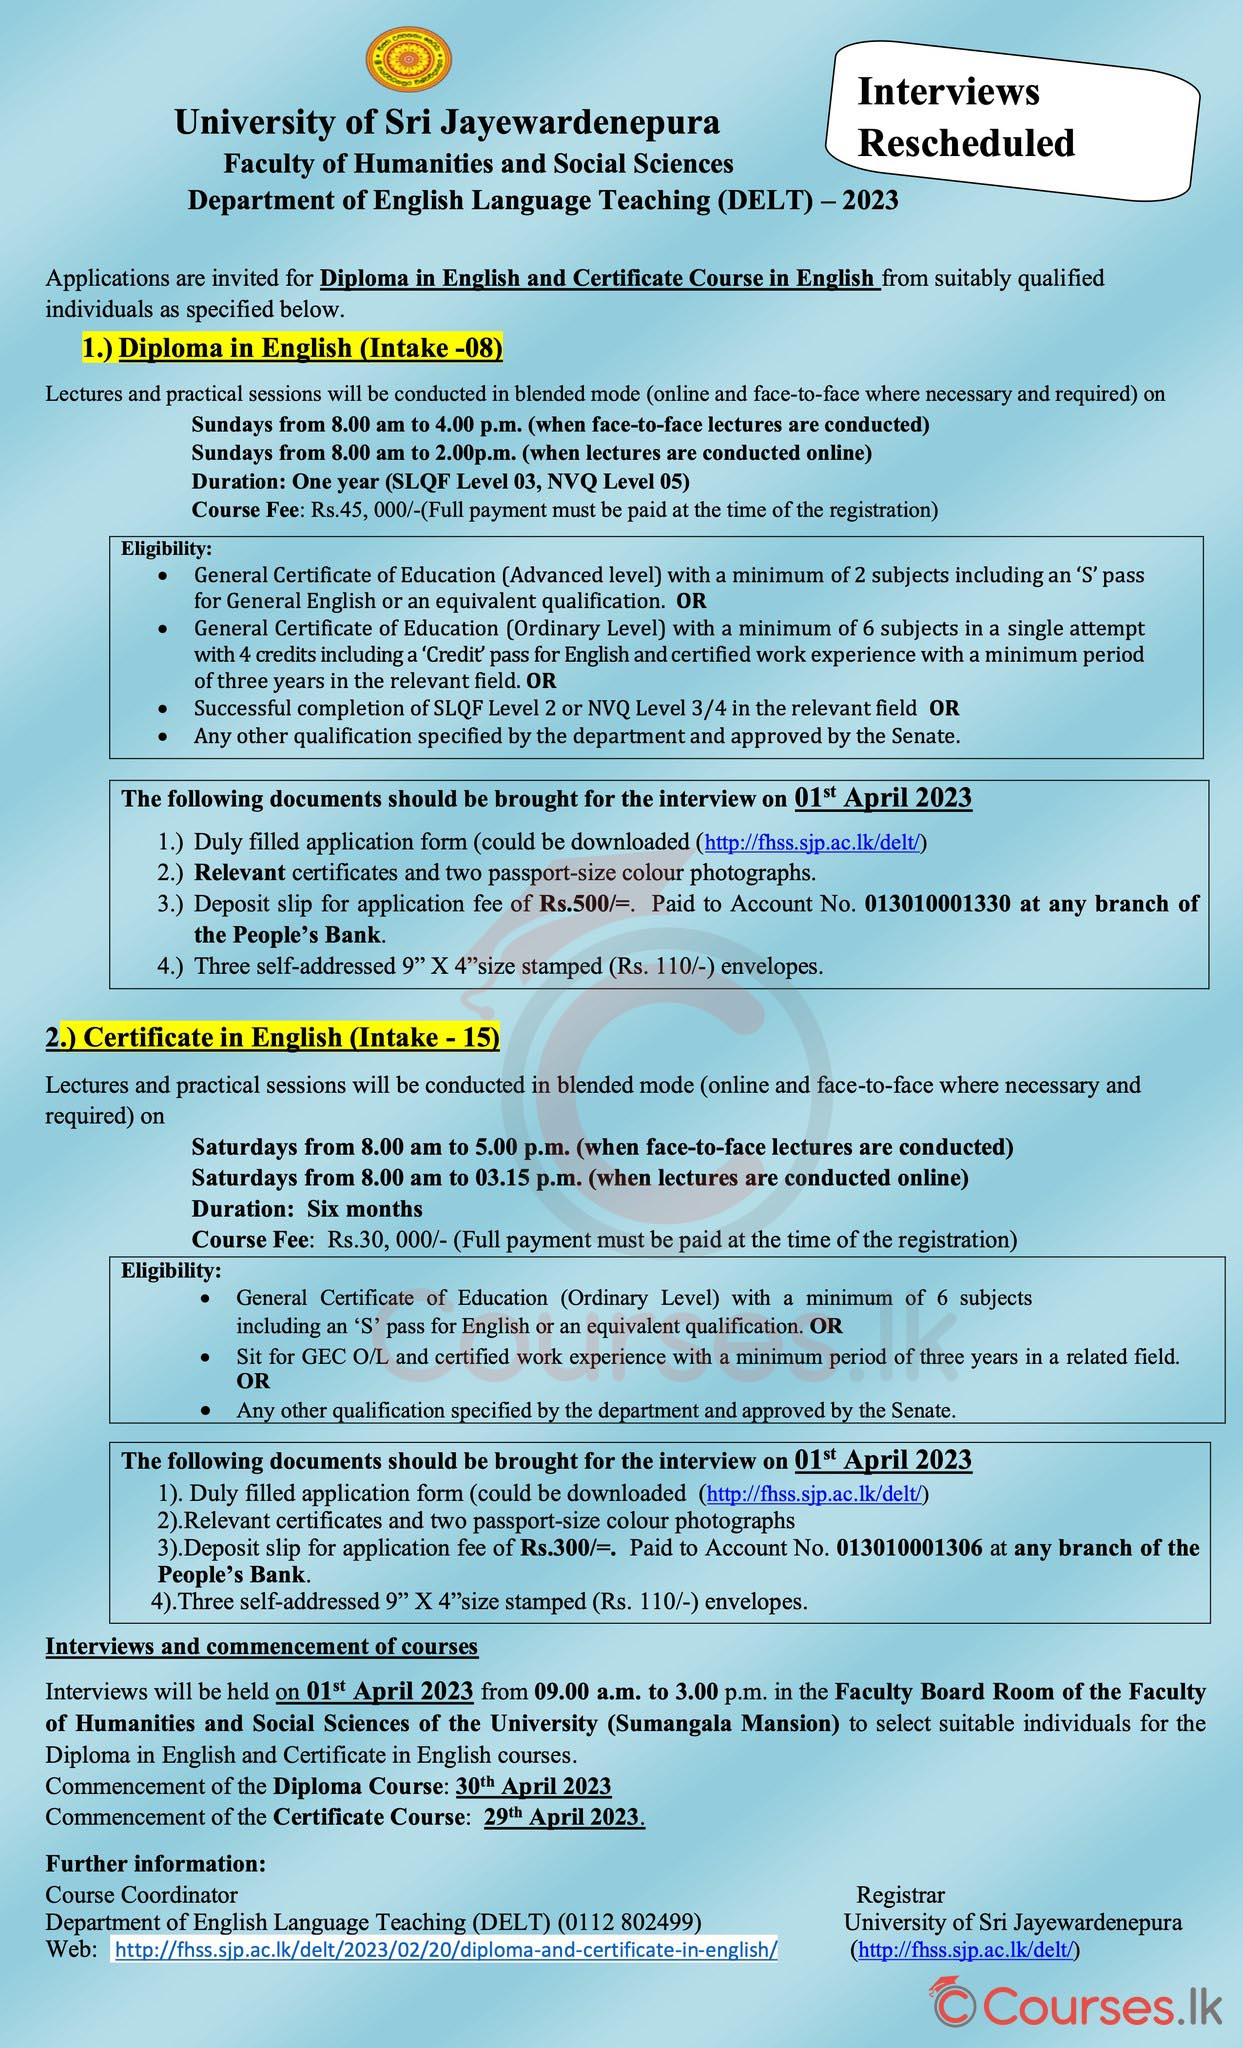 Call for Applications - Diploma & Certificate Courses in English (2023) - University of Sri Jayewardenepura